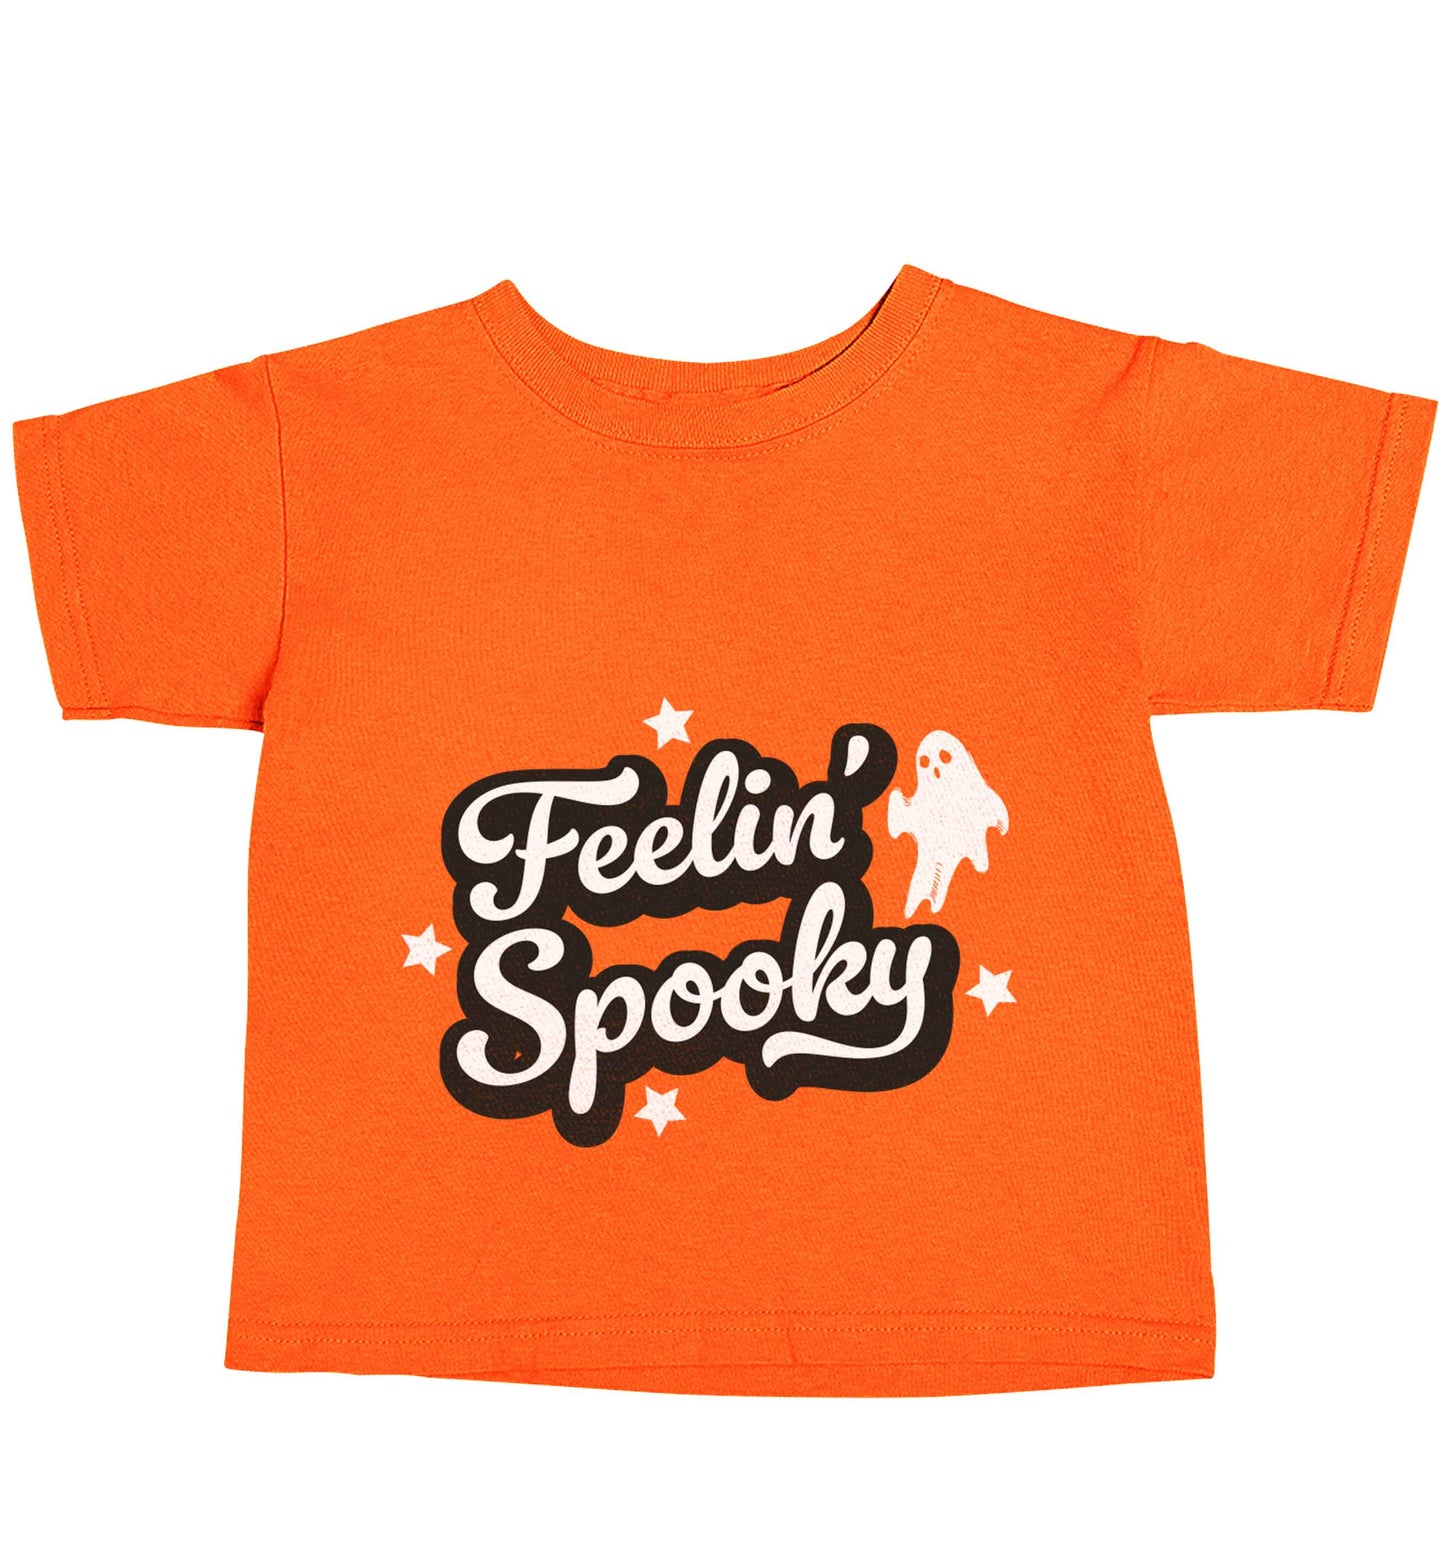 Feelin' Spooky Kit orange baby toddler Tshirt 2 Years